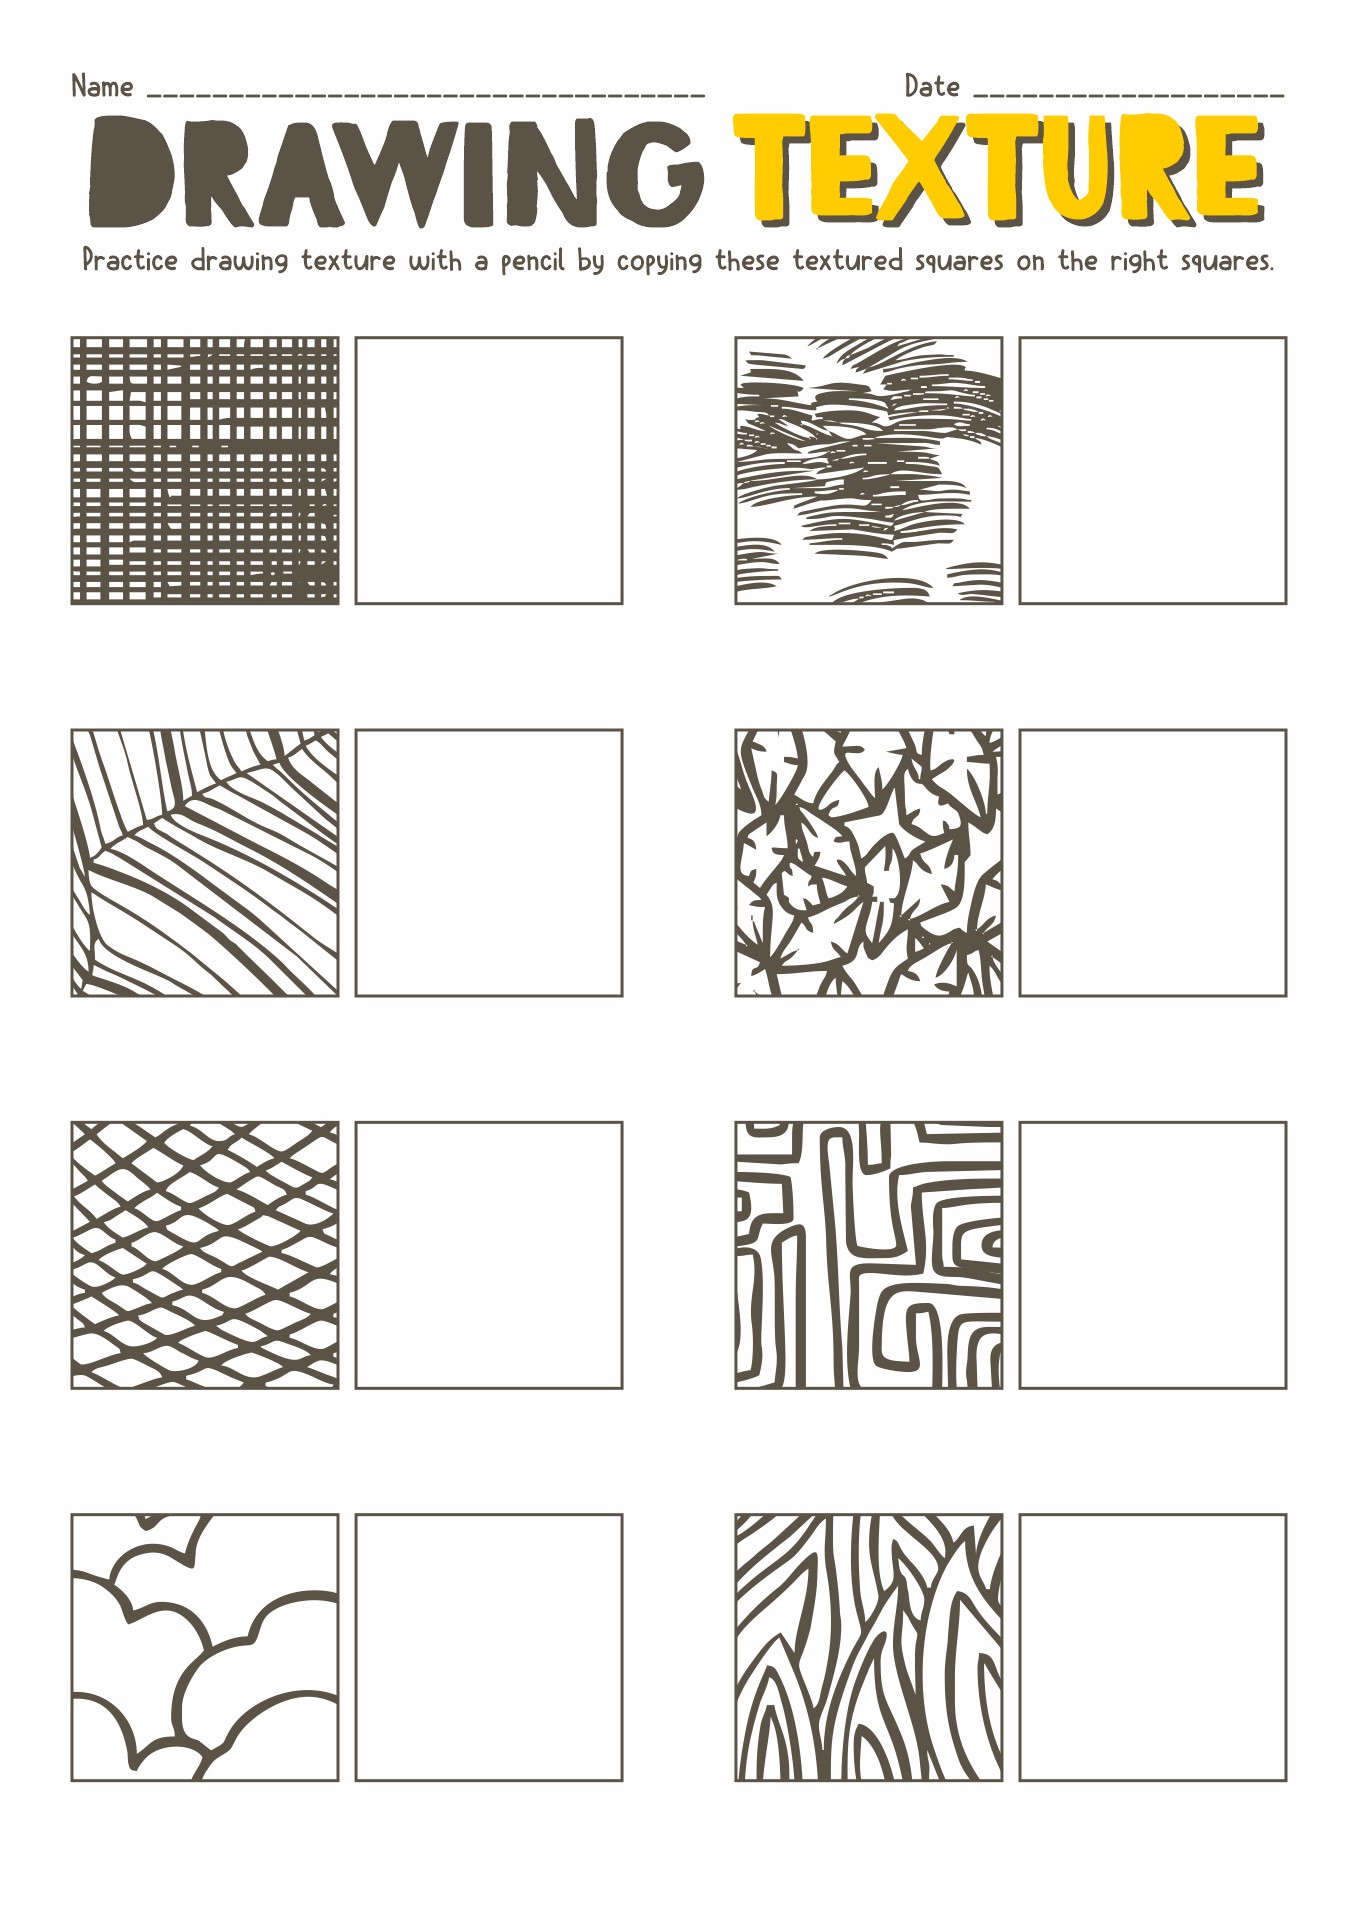 Drawing Texture Worksheet Image